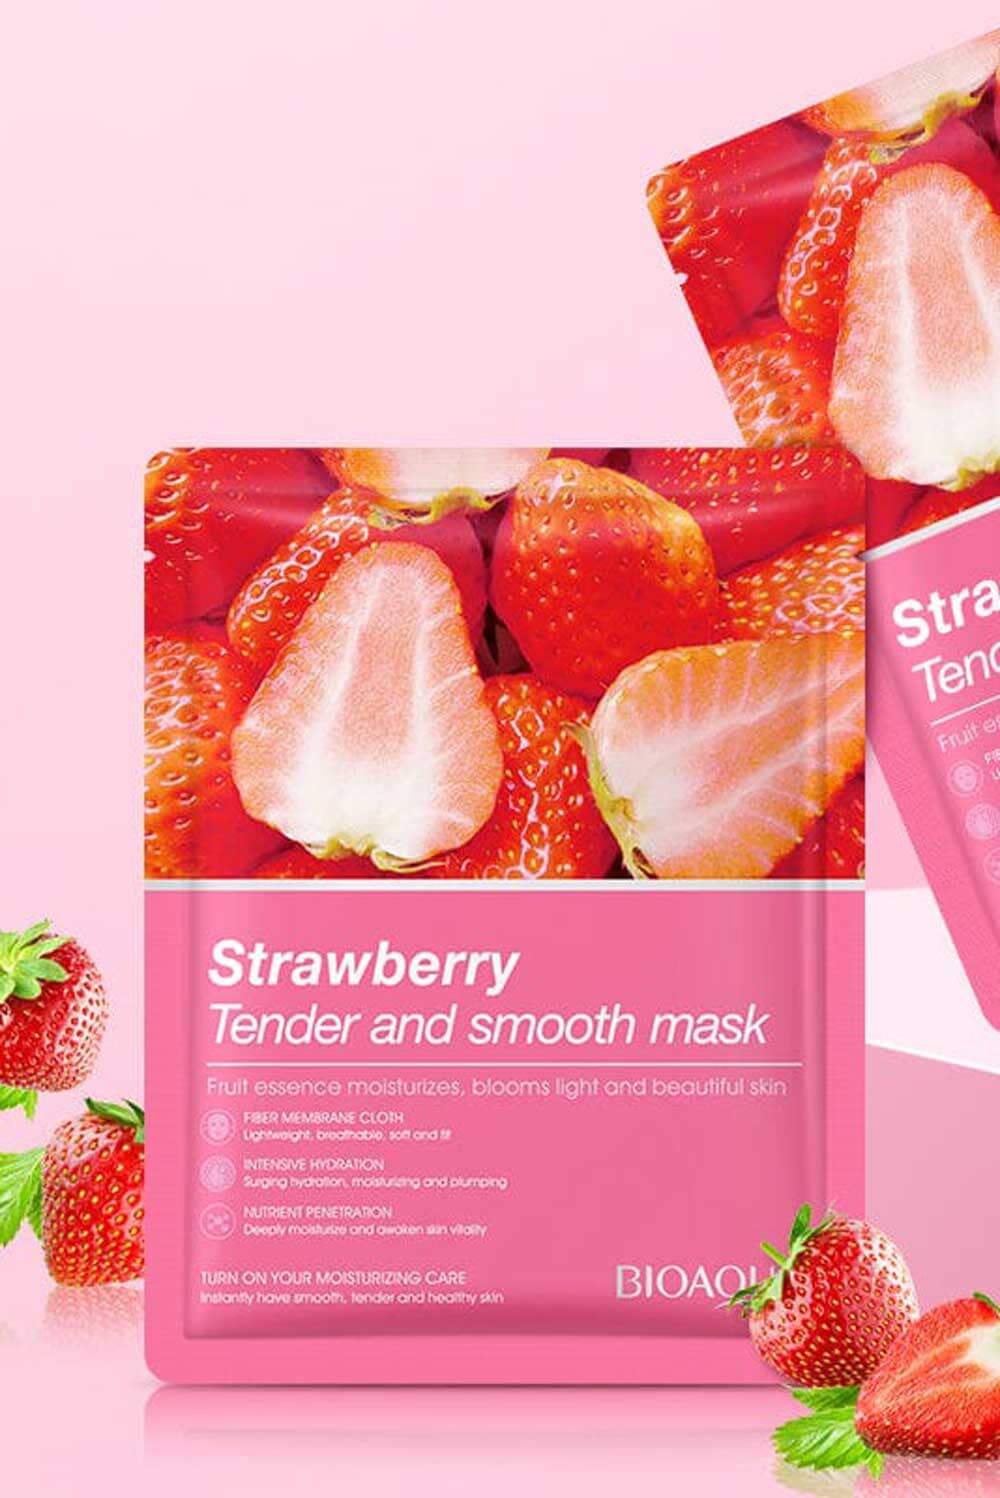 Bioaqua Strawberry Tender And Smooth Sheet Mask - 25G Strawberrytenderandsmoothmask 3 800X 7C45Ad82 Fcb7 4Cd9 A738 960B0E9Bd0De